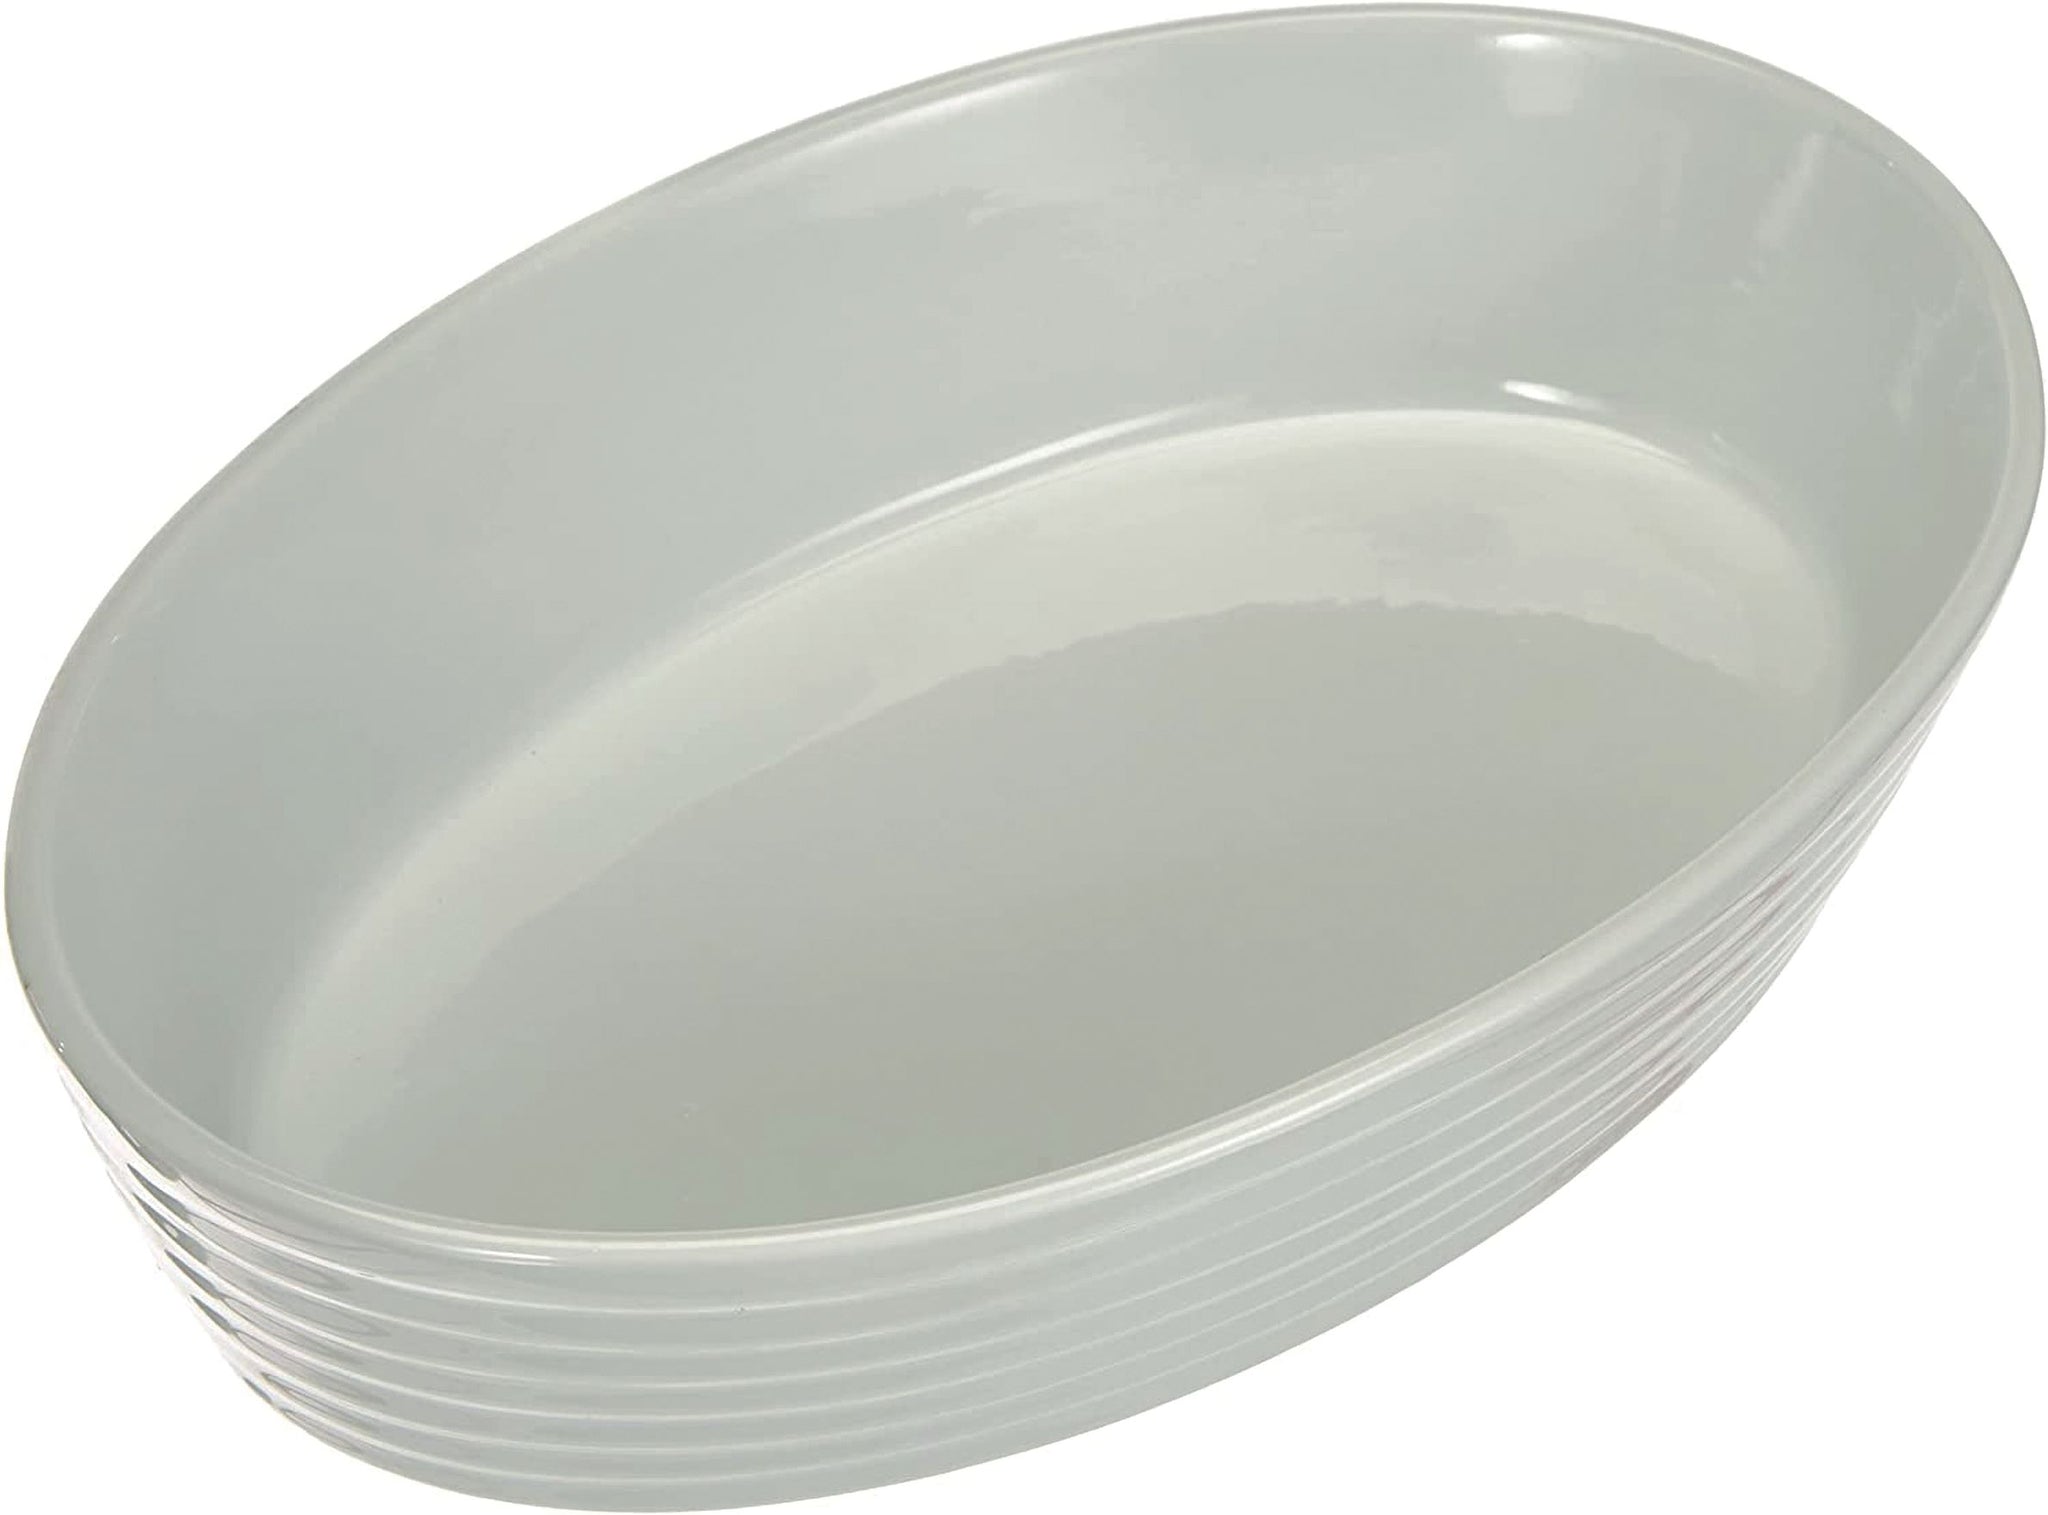 OvenChef Oval White Baking Dish